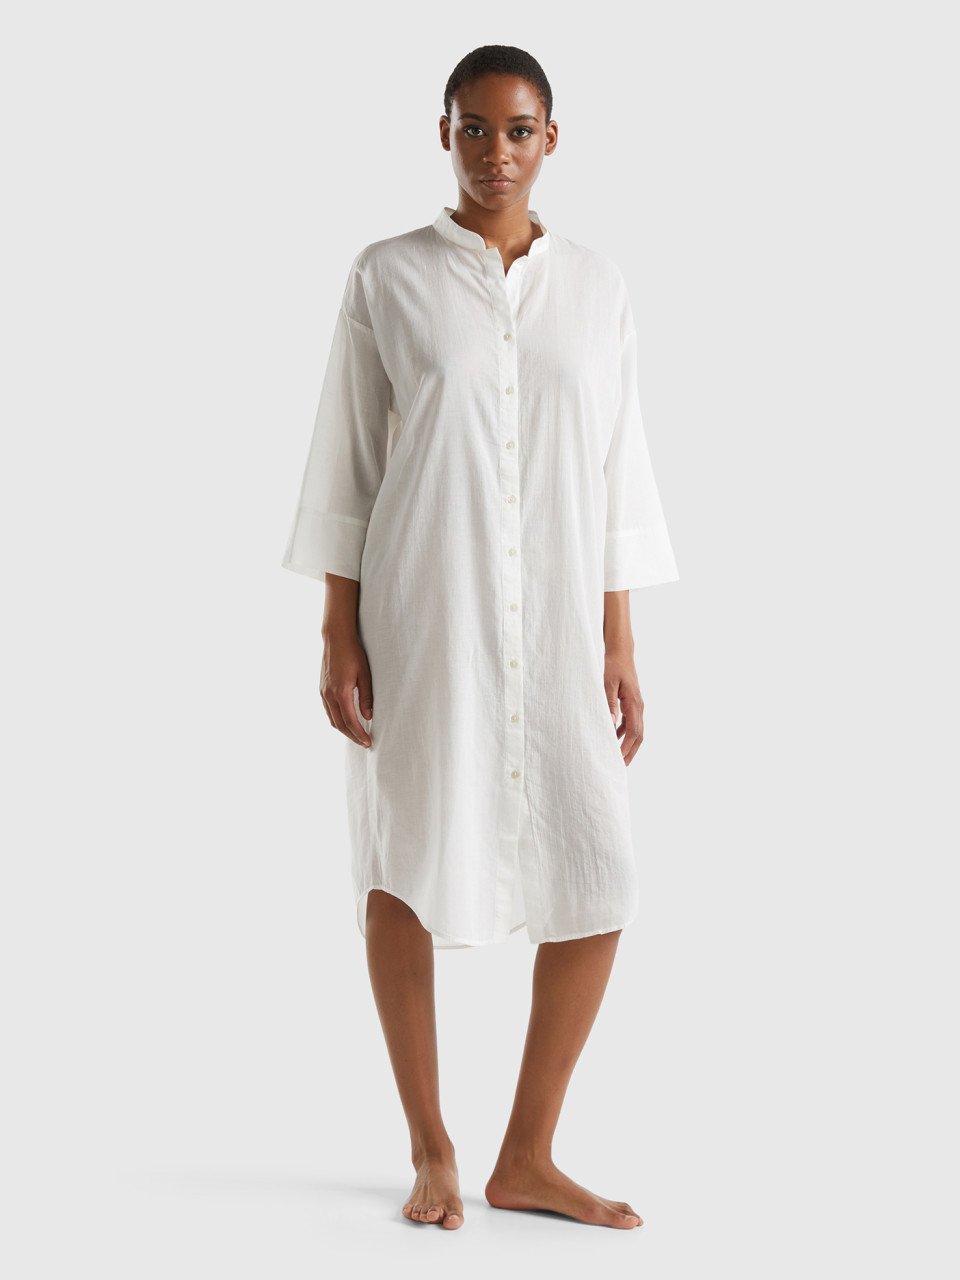 Benetton, Shirt-style Dress, Creamy White, Women